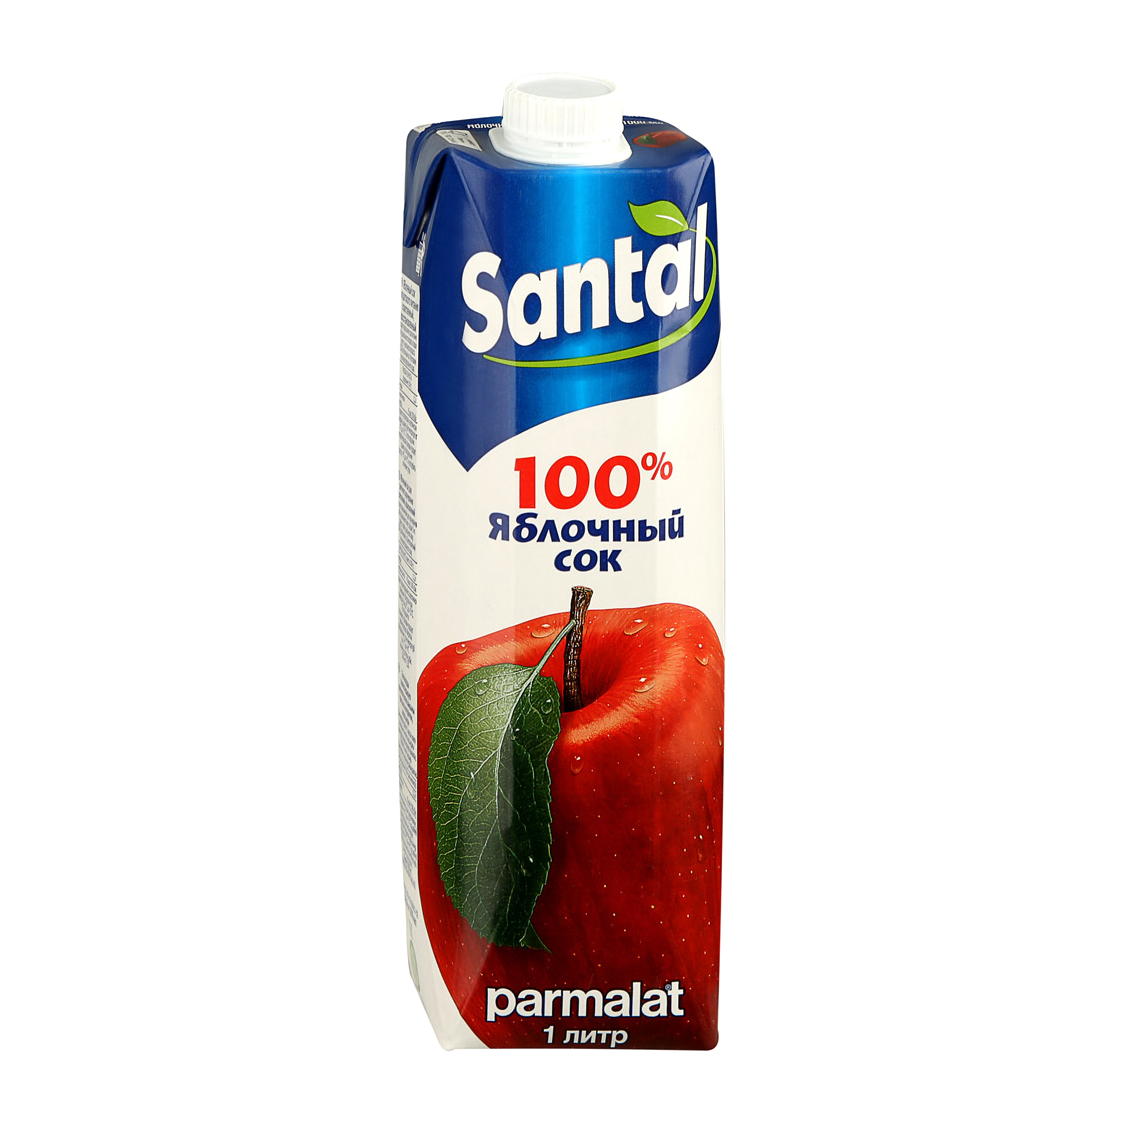 Сок Santal яблочный 100% 1 л сок santal красный виноград 1 л